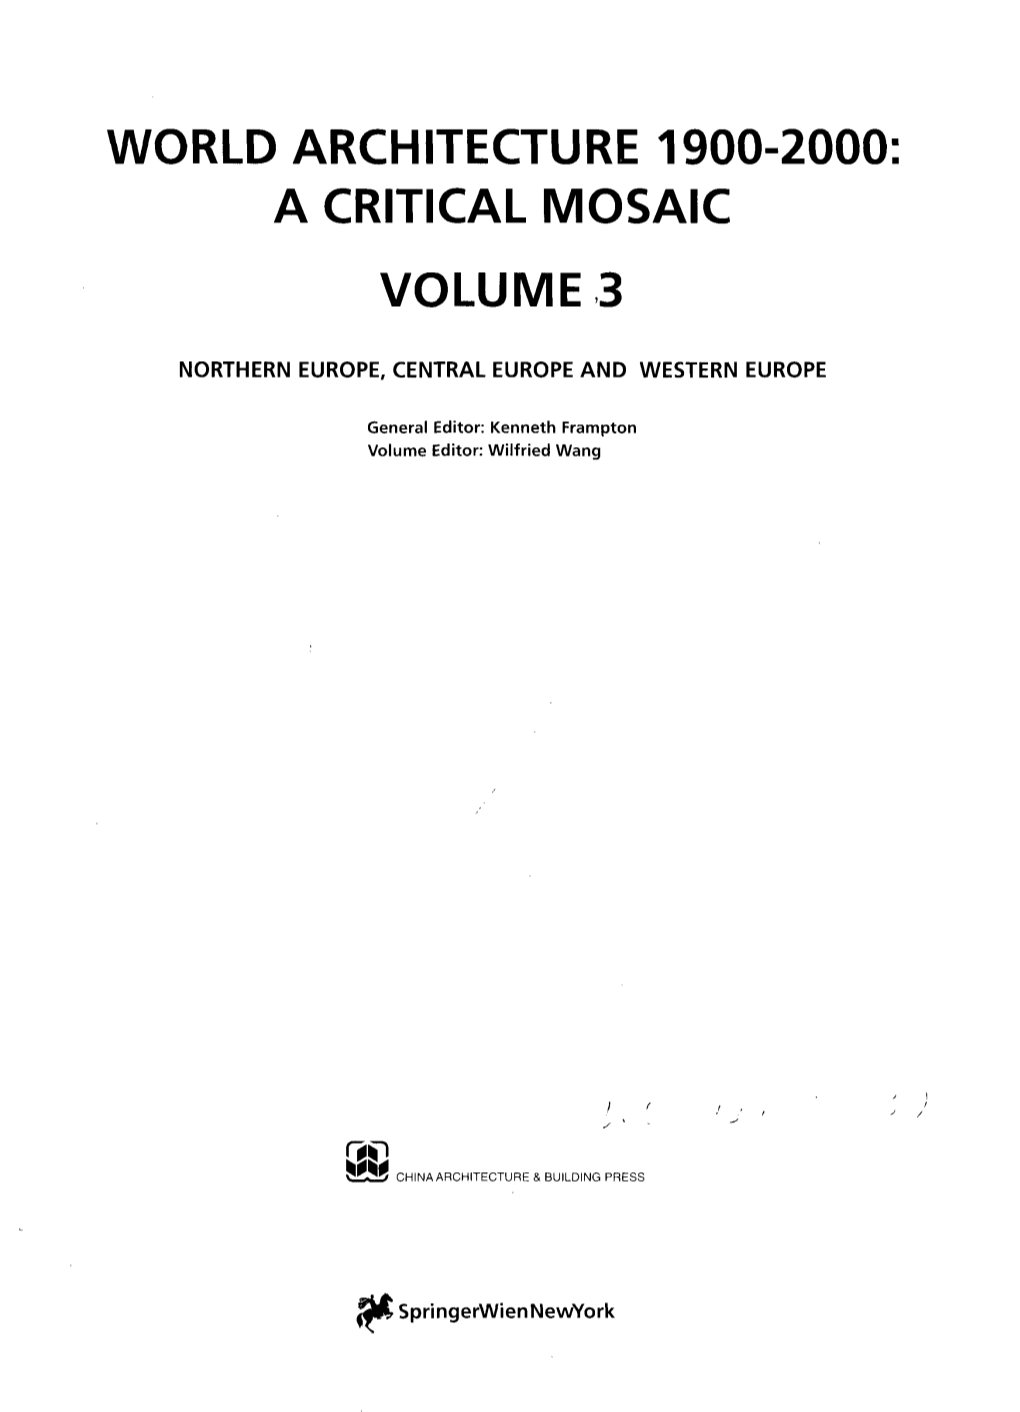 World Architecture 1900-2000: a Critical Mosaic Volume 3